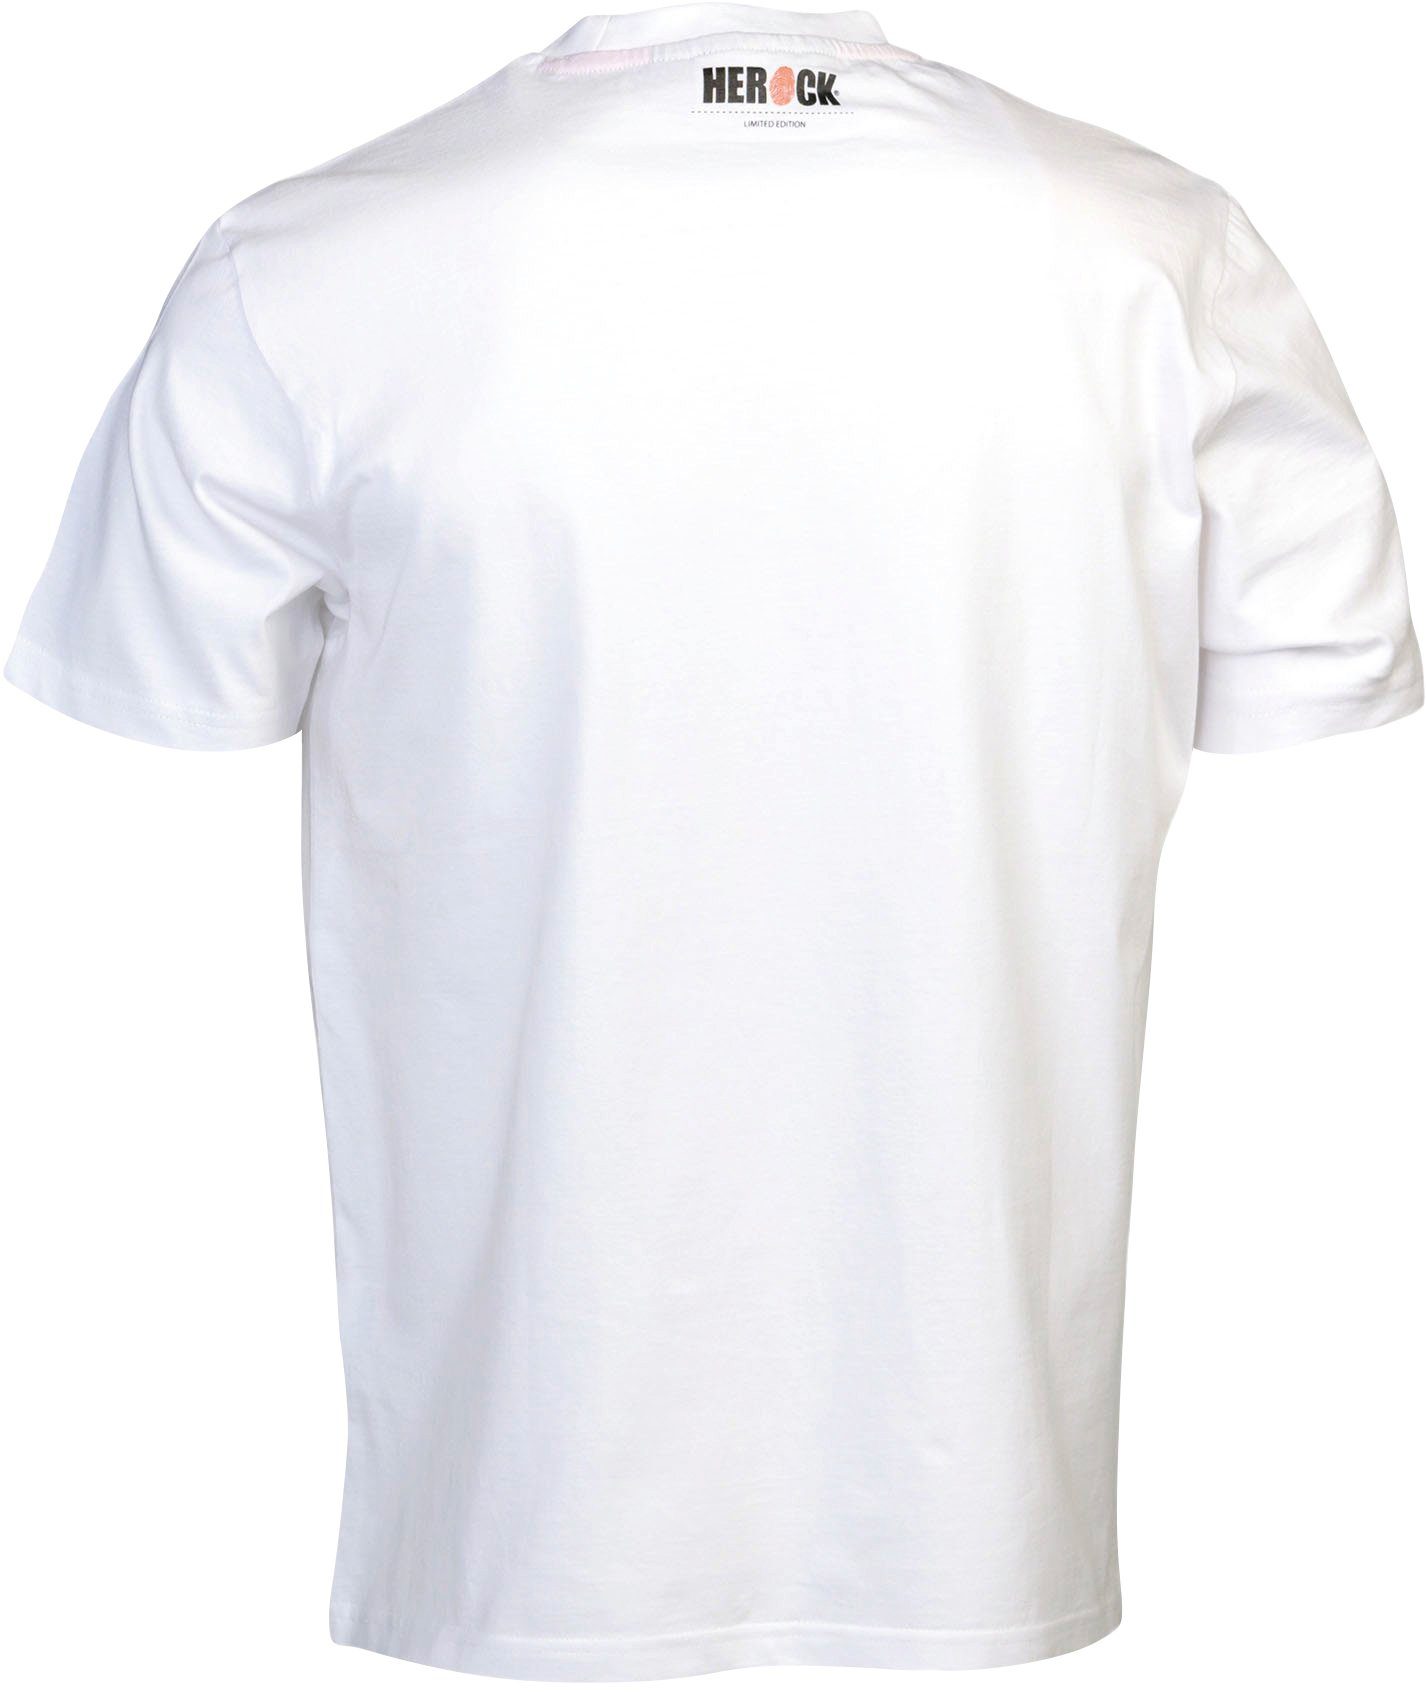 Ärmeln, Burst Herock®-Aufdruck Herock Mit Rundhalsausschnitt, kurzen T-Shirt